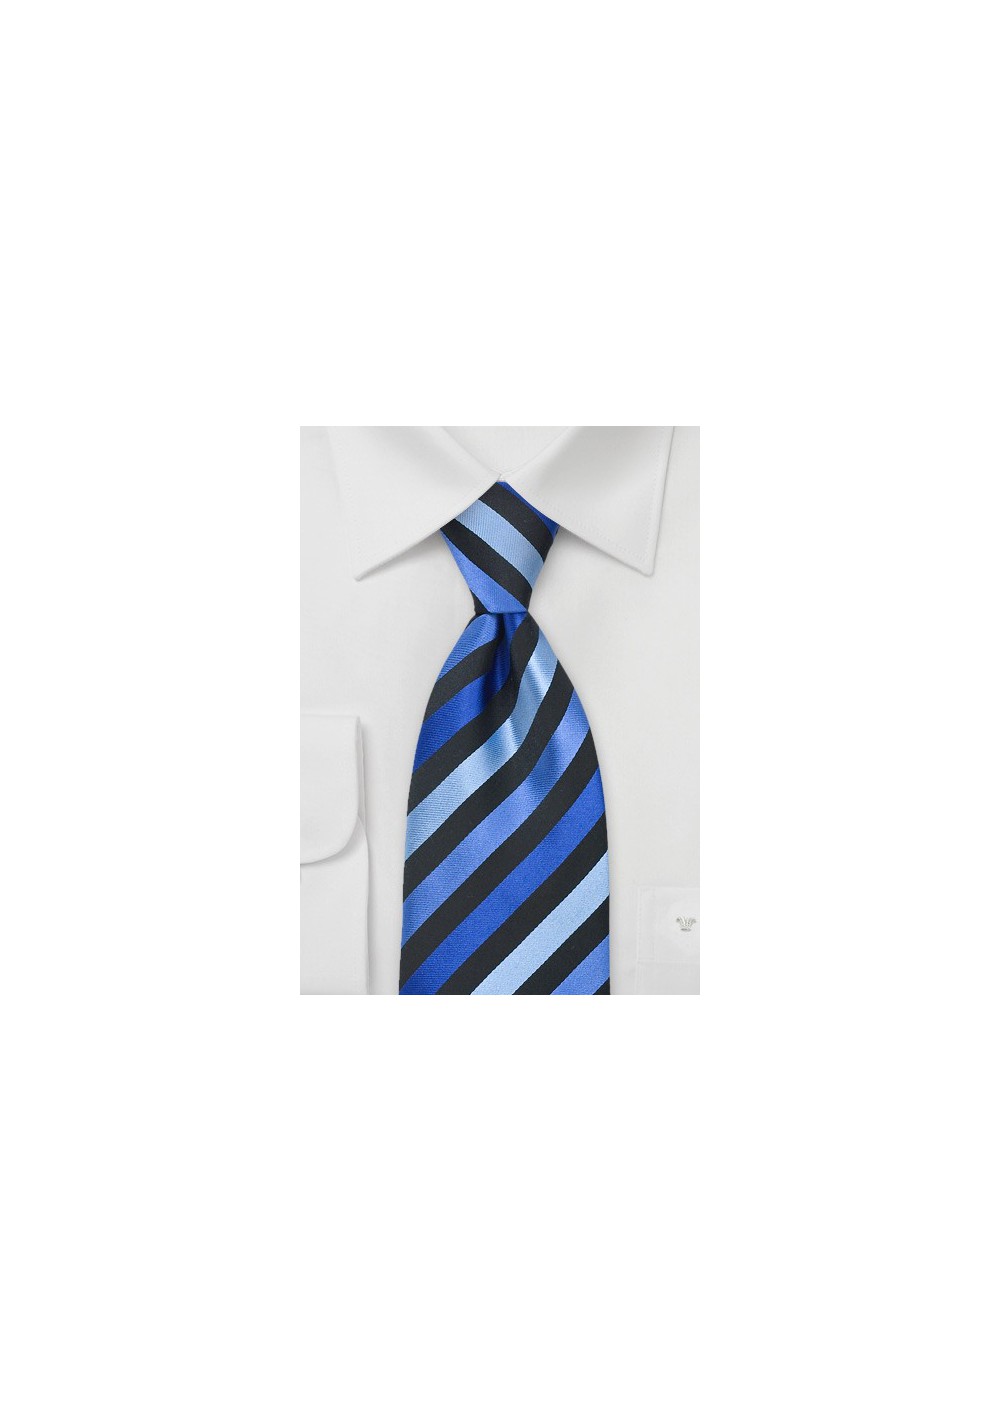 Blue & Black Striped Silk Tie